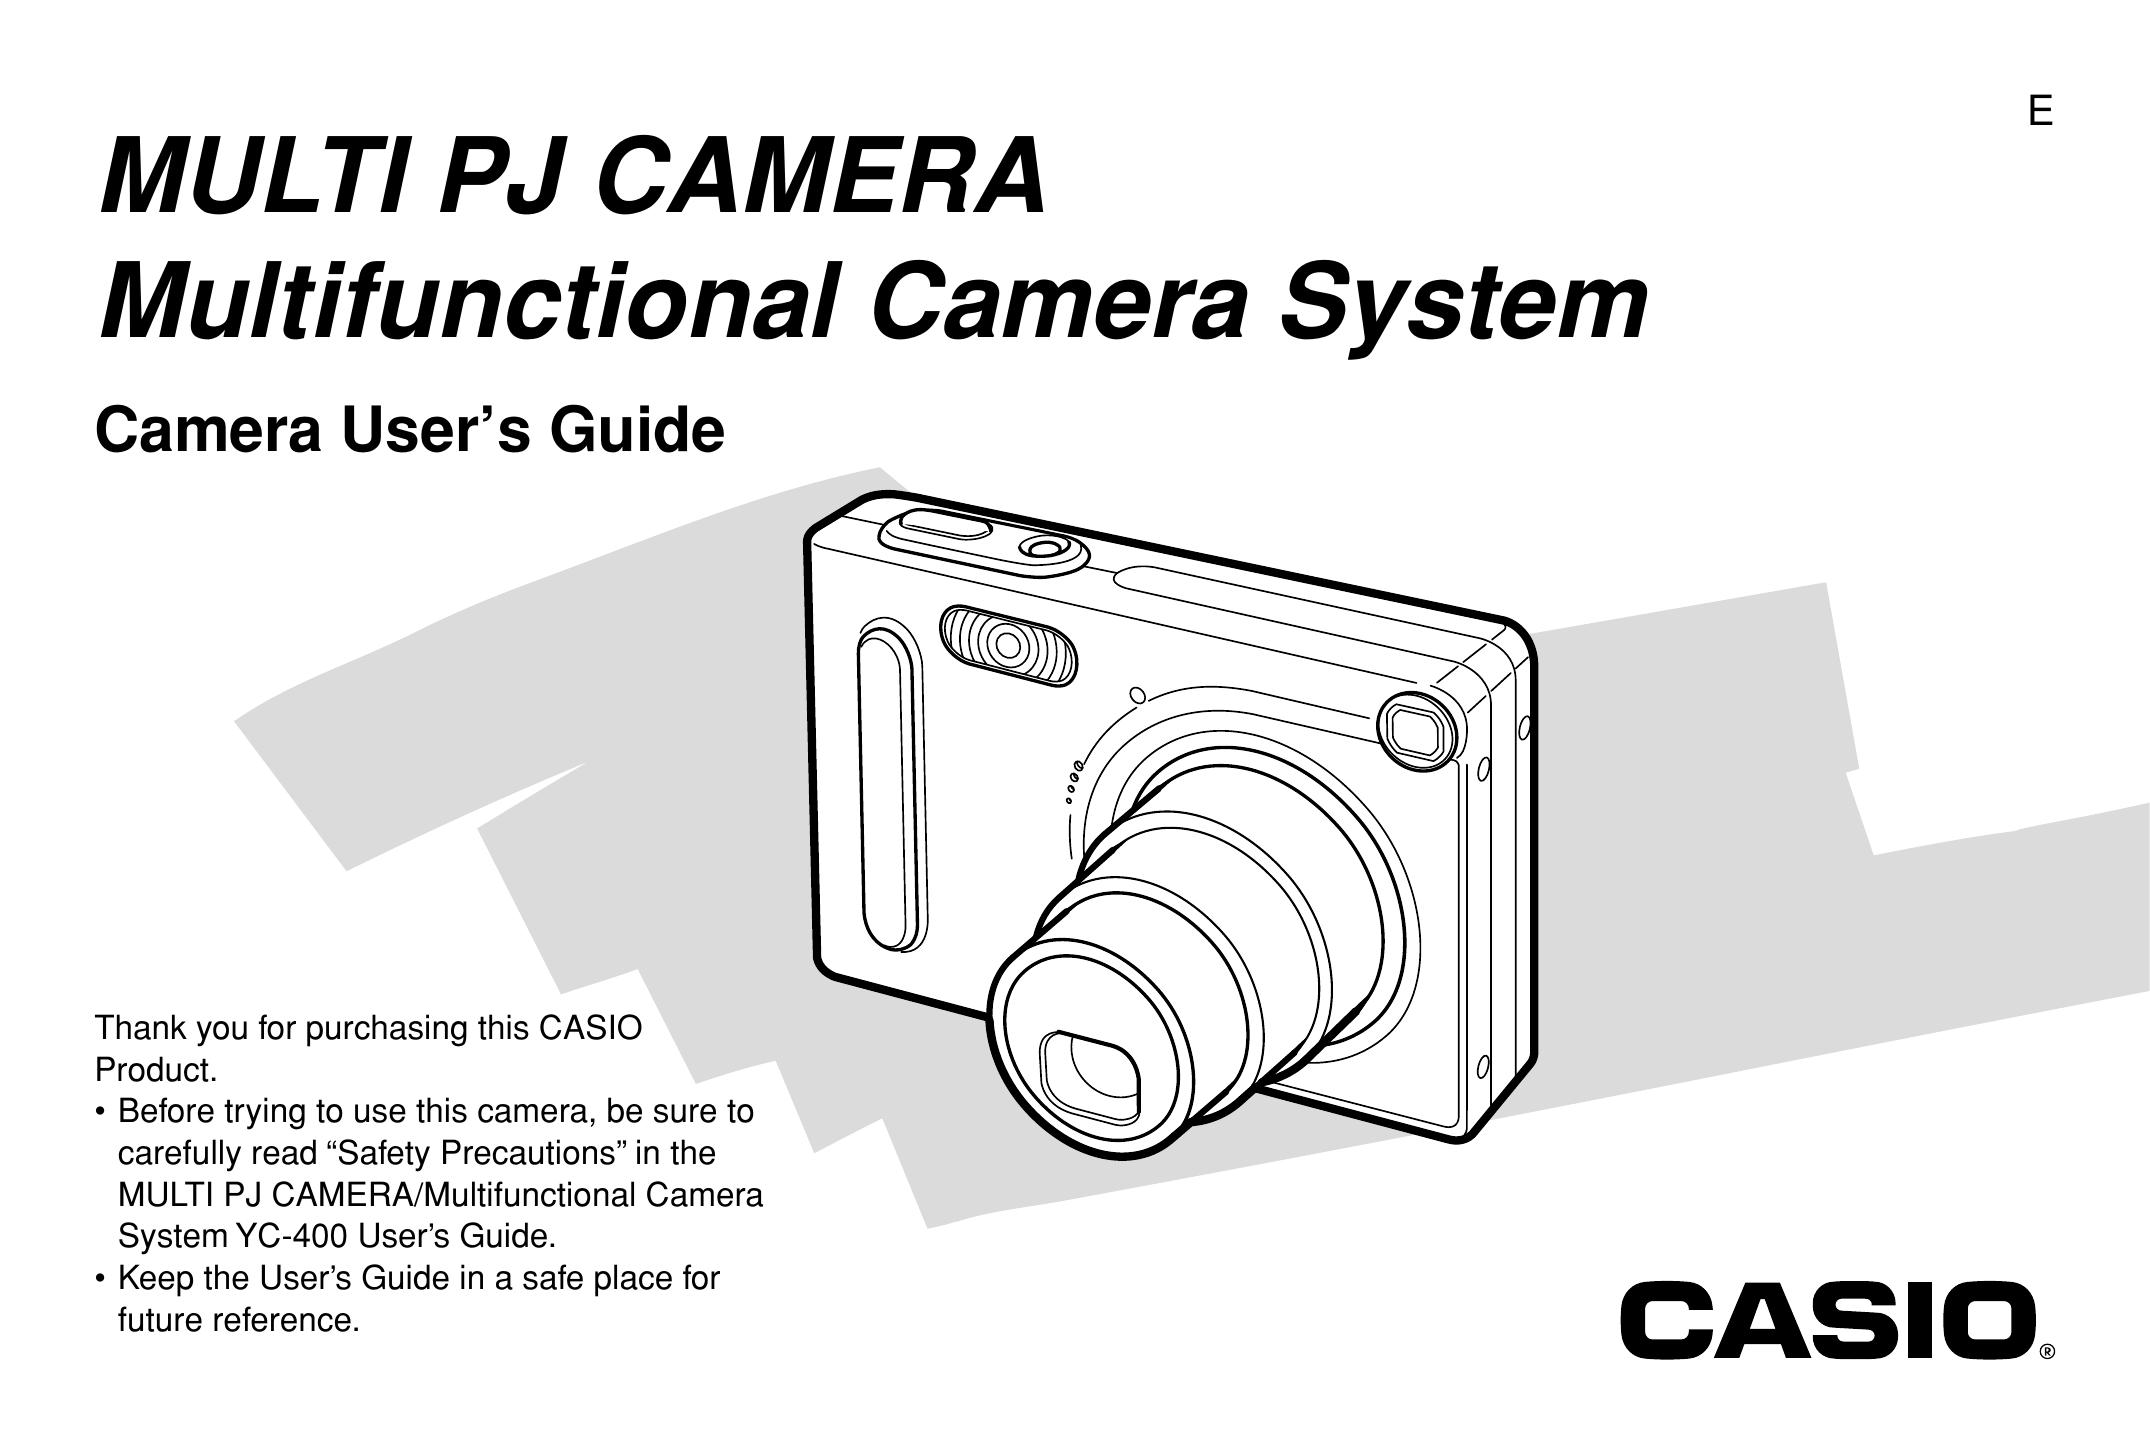 Casio E MULTI PJ CAMERA Multifunctional Camera System Digital Camera User Manual